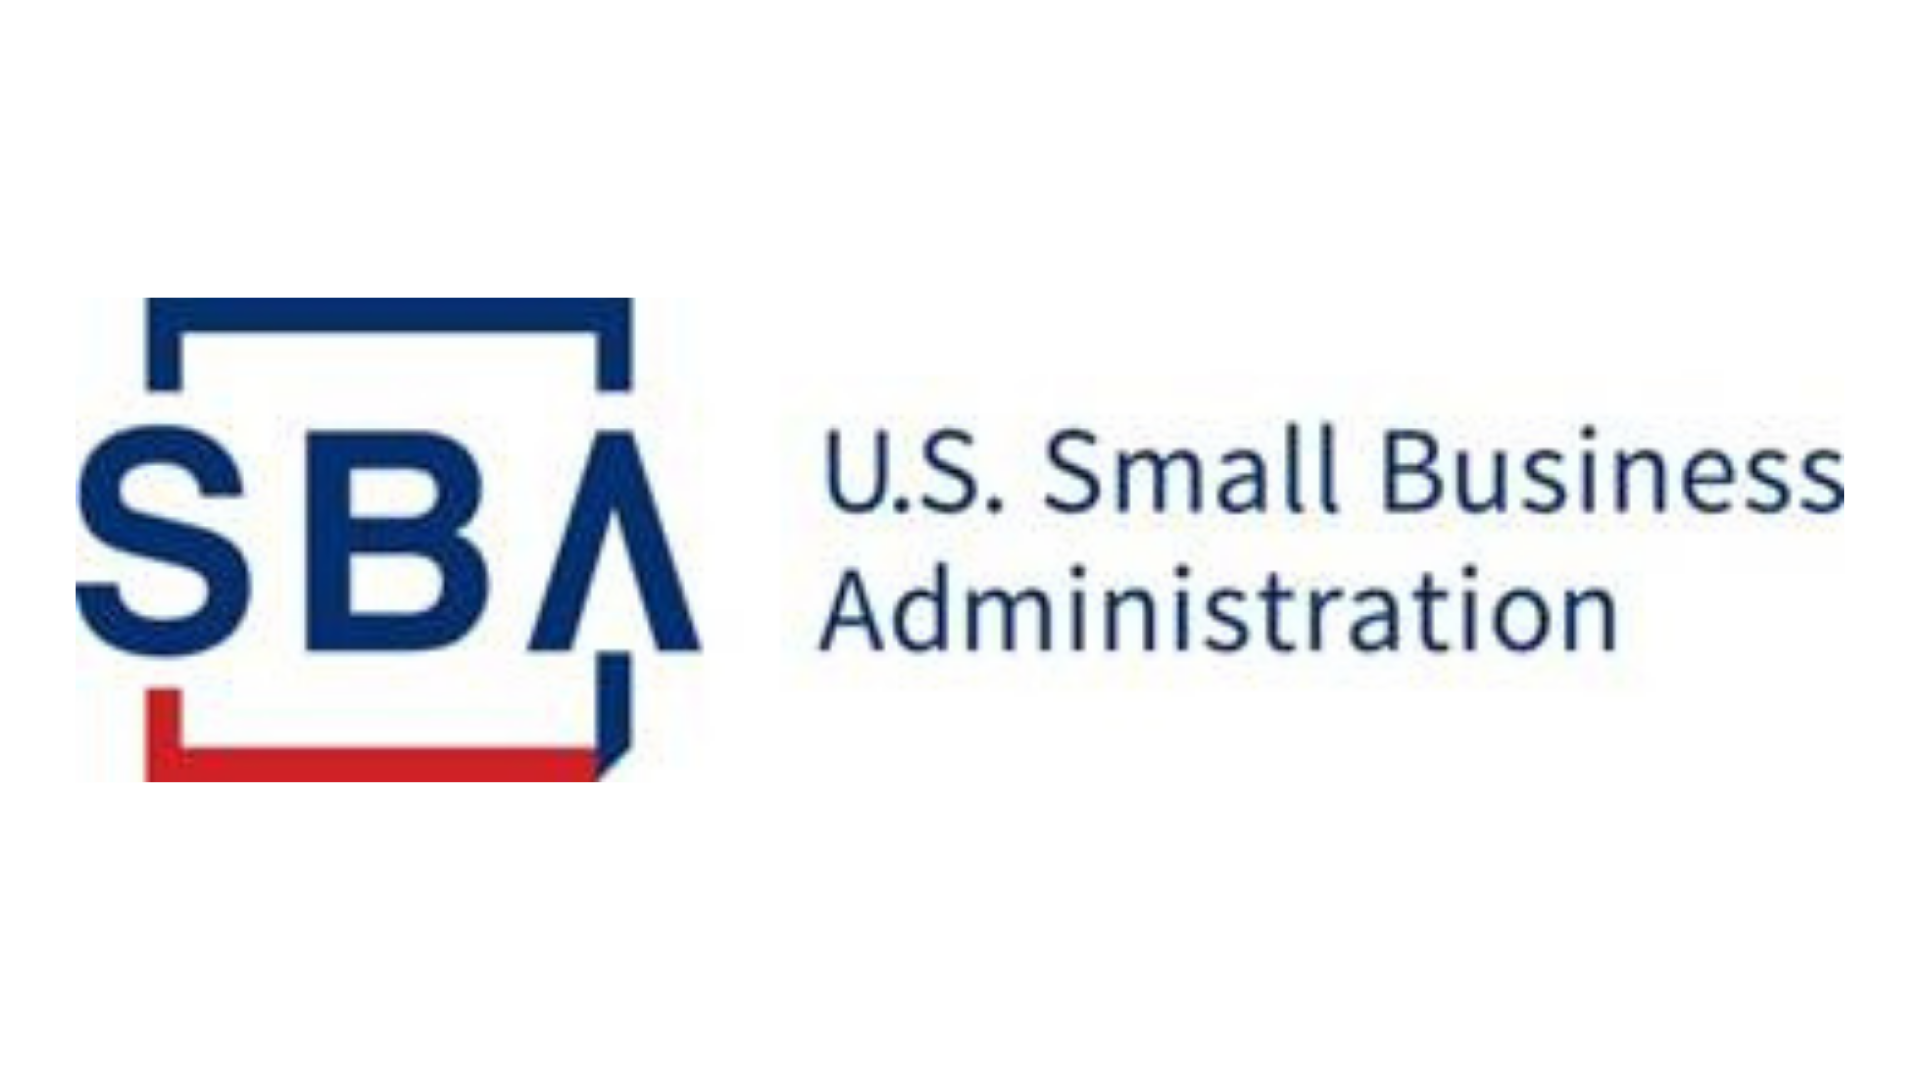 U.S. small business administration logo